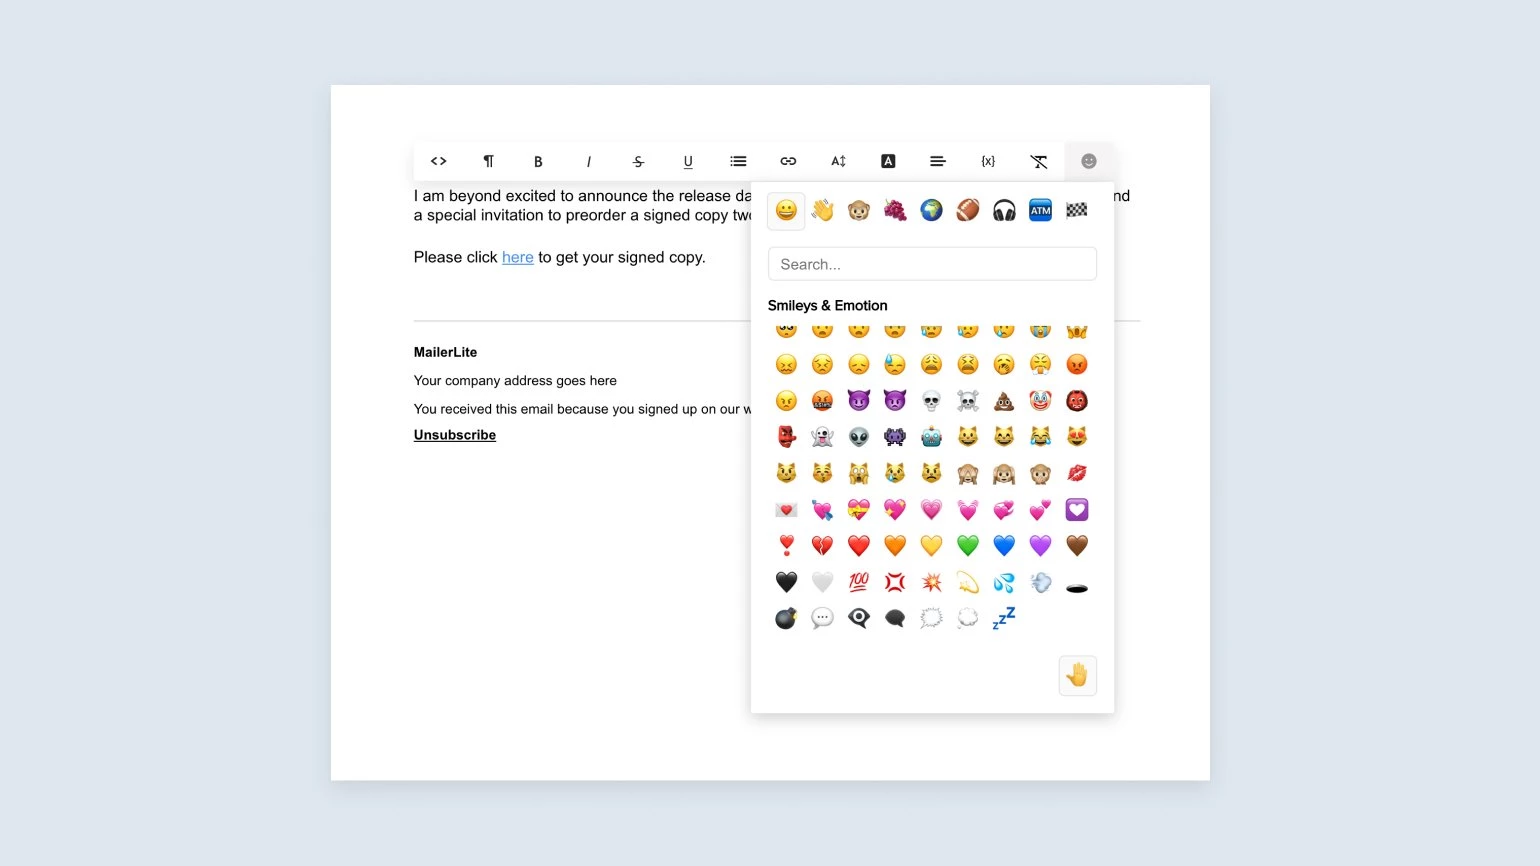 Emoji search bar in the rich-text editor